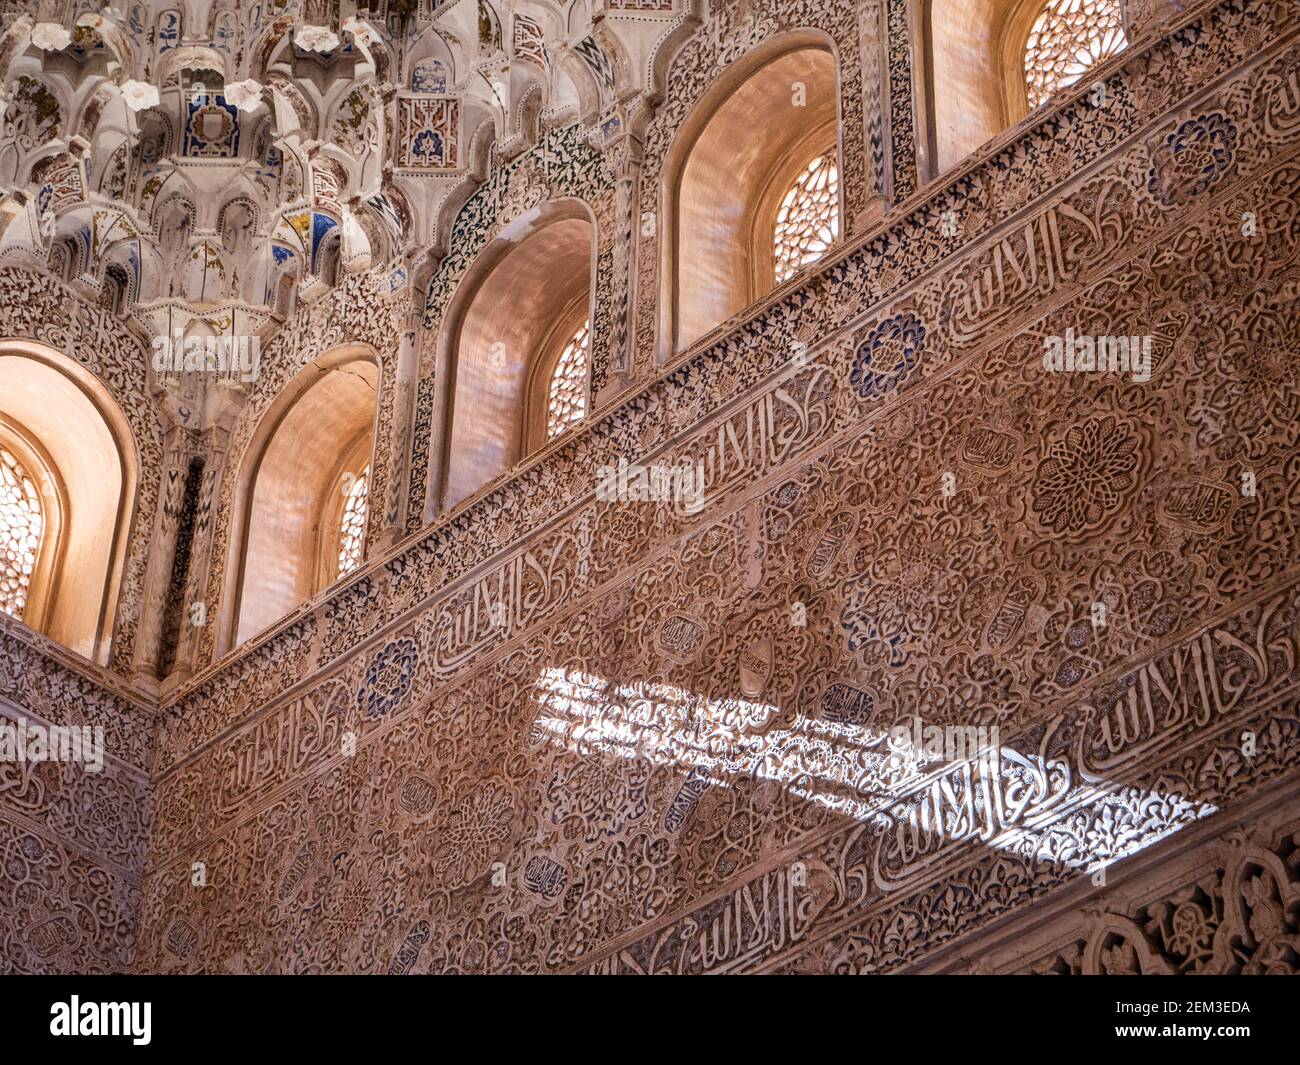 Stalactite work in Sala de los Abencerrajes (Hall of the Abencerrajes) The Alhambra, Granada, Spain. Stock Photo